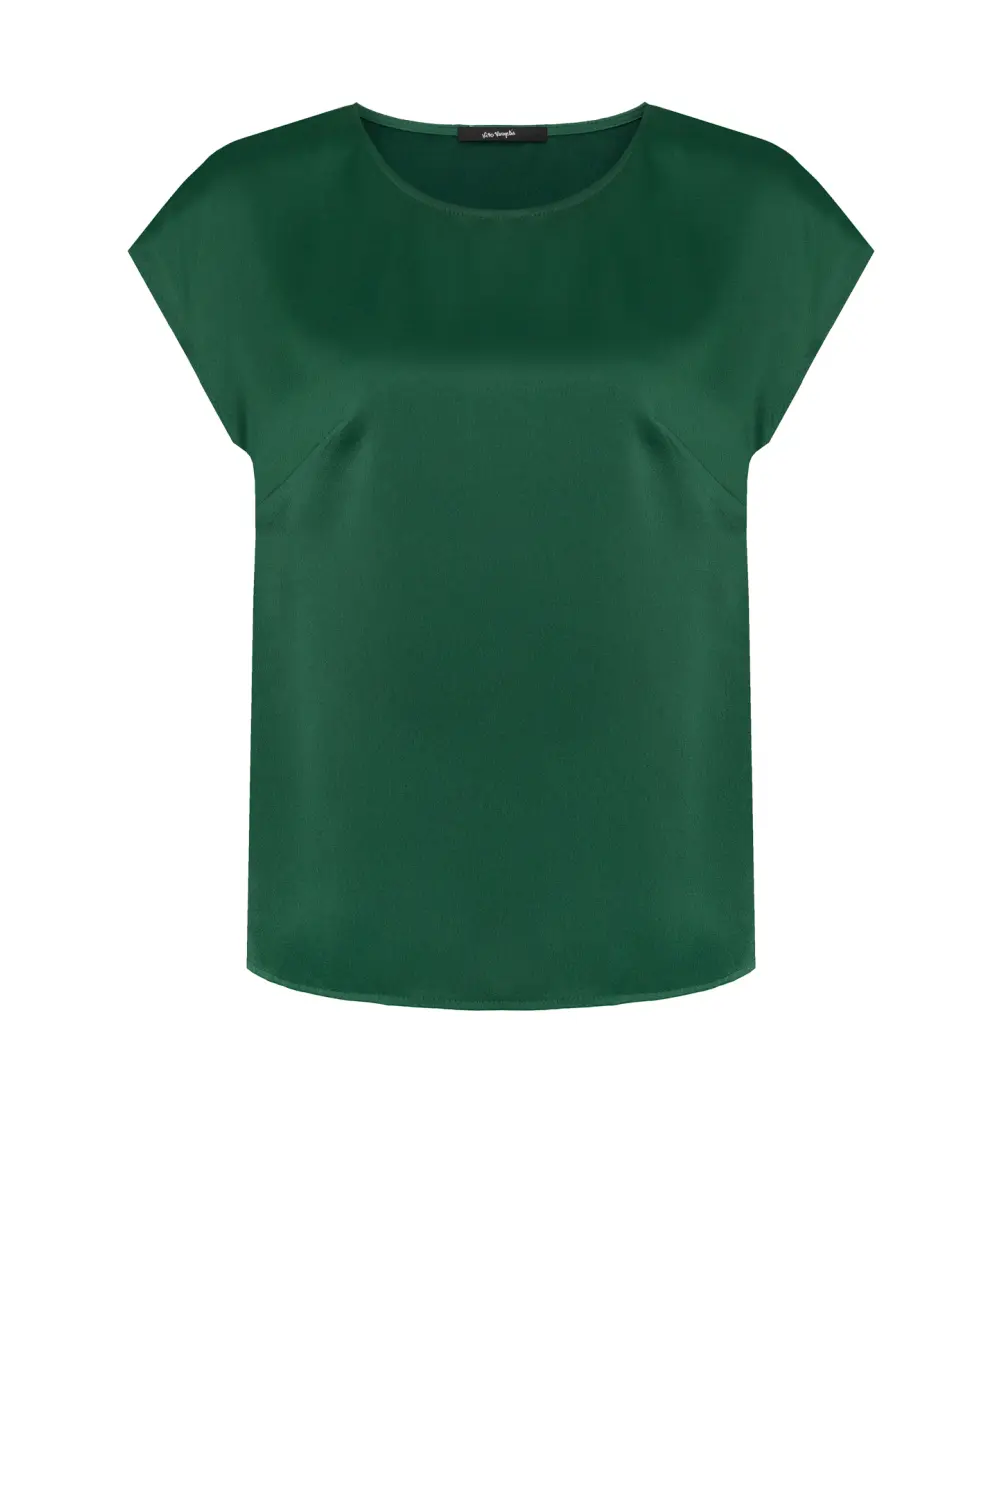 Zielona bluzka damska satynowa wizytowa polska marka Vito Vergelis